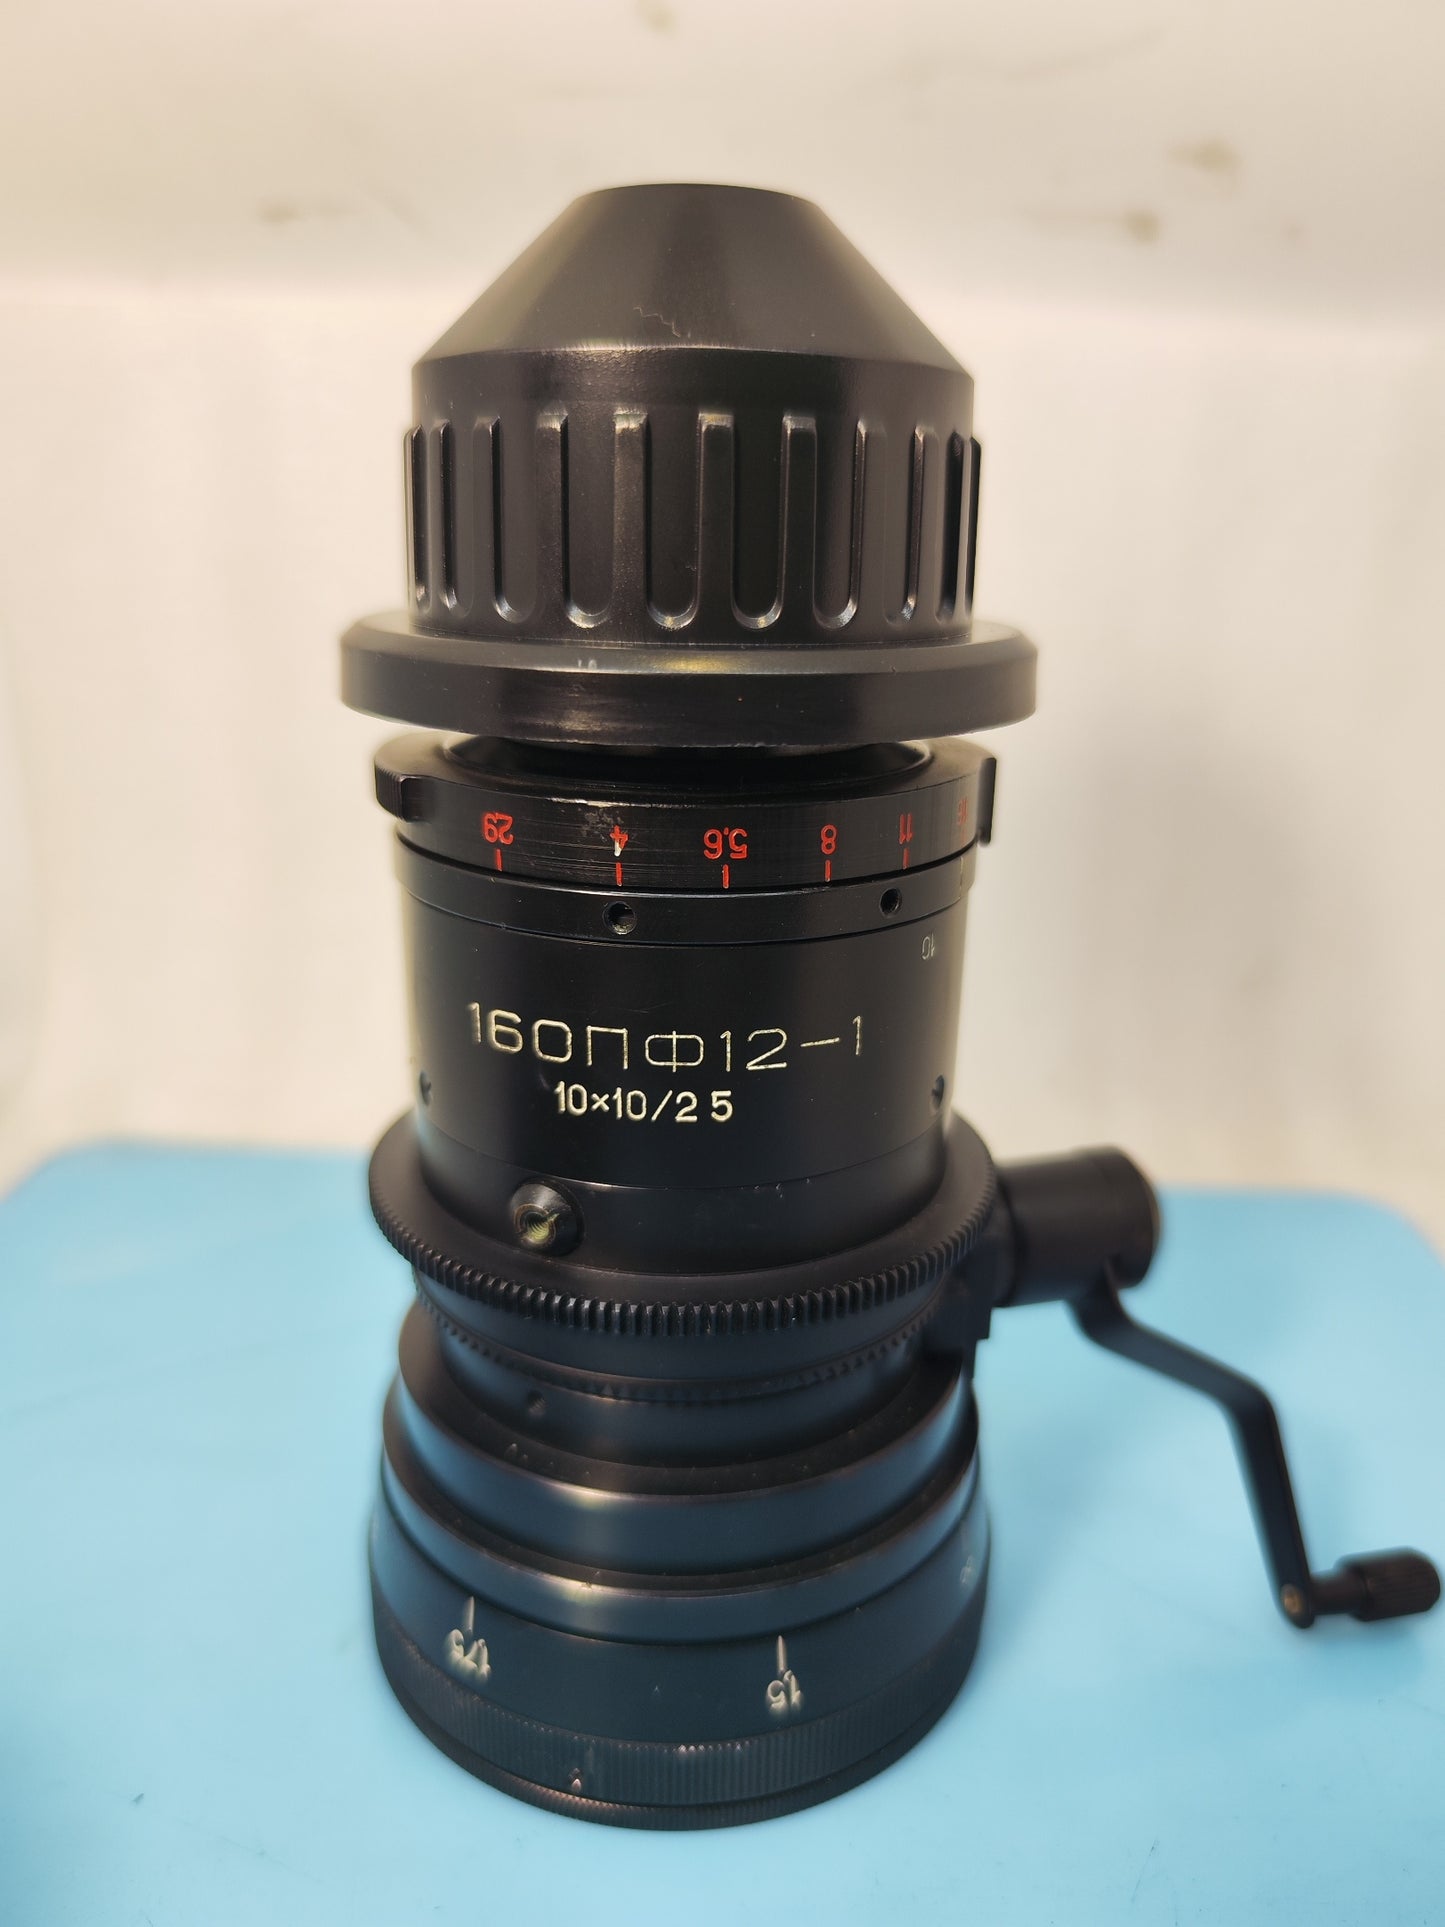 Arri PL Zoom Cine Lens 16OPF12-1 10-100mm 7.5-75mm F2.5 movie camera Kinor LOMO